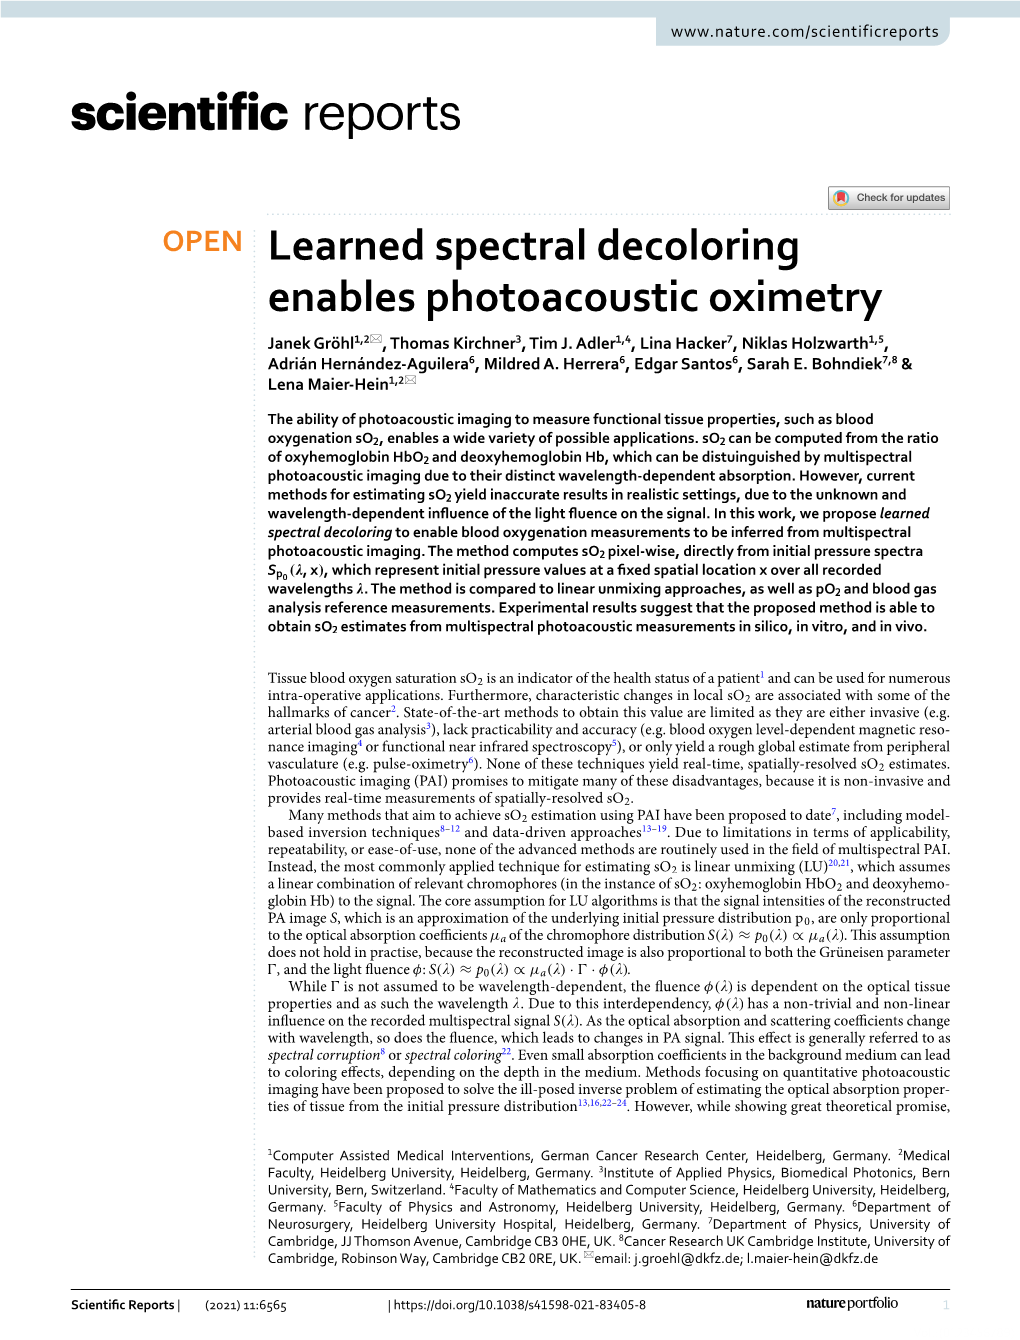 Learned Spectral Decoloring Enables Photoacoustic Oximetry Janek Gröhl1,2*, Thomas Kirchner3, Tim J